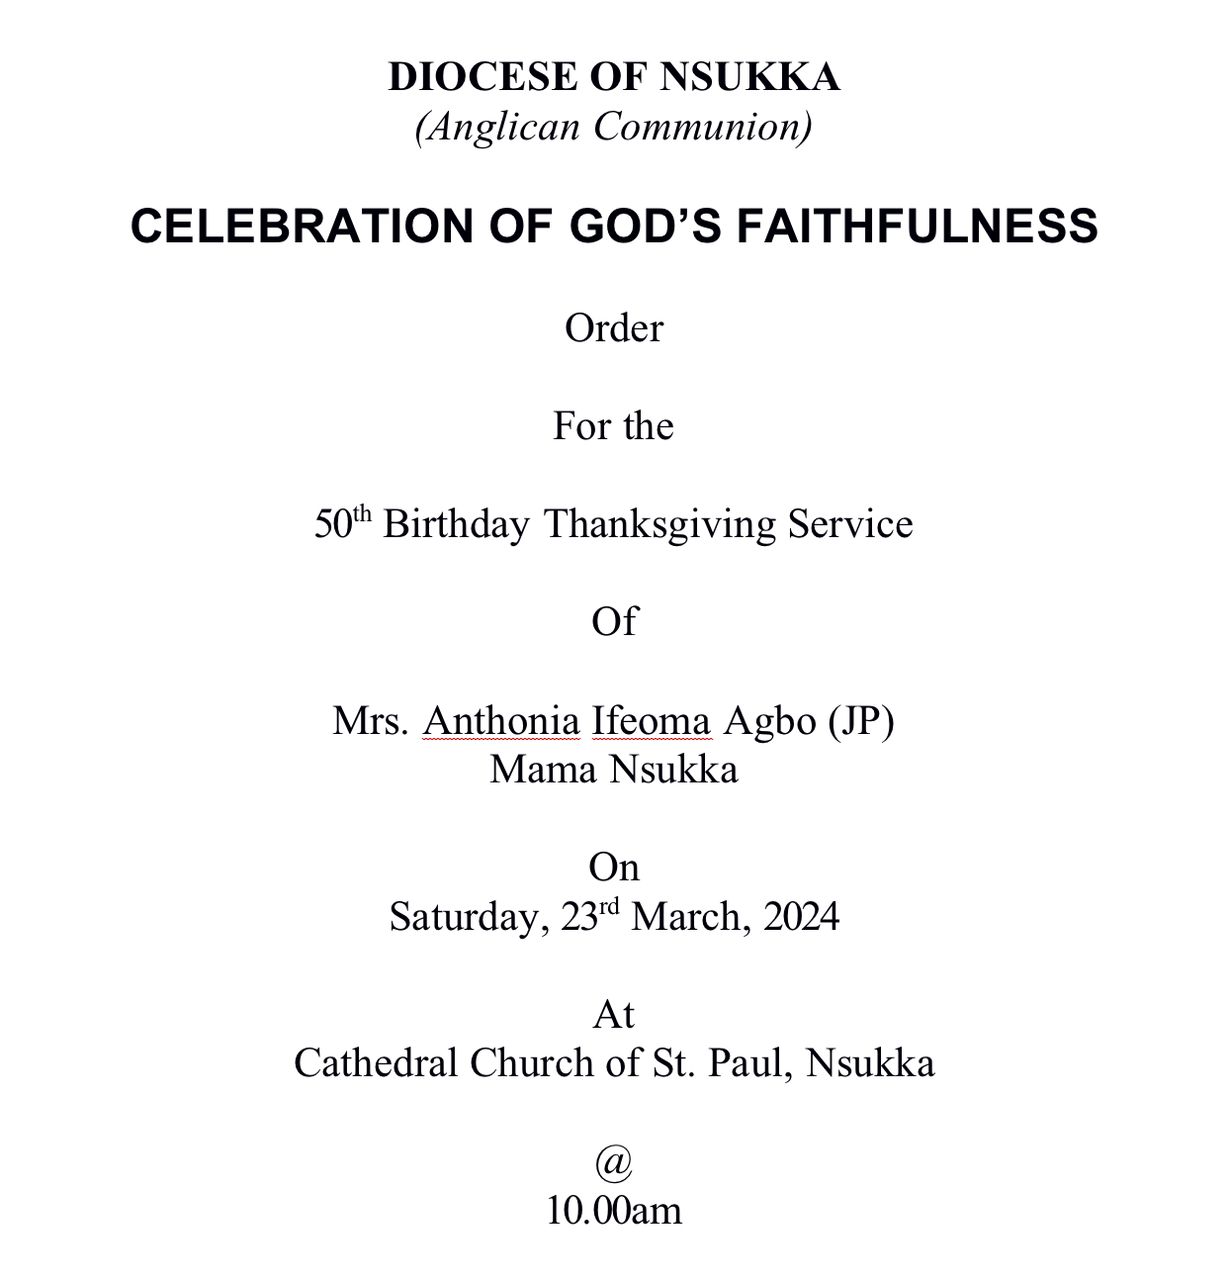 50TH BIRTHDAY THANKSGIVING SERVICE OF MRS ANTHONIA IFEOMA AGBO (JP), MAMA NSUKKA